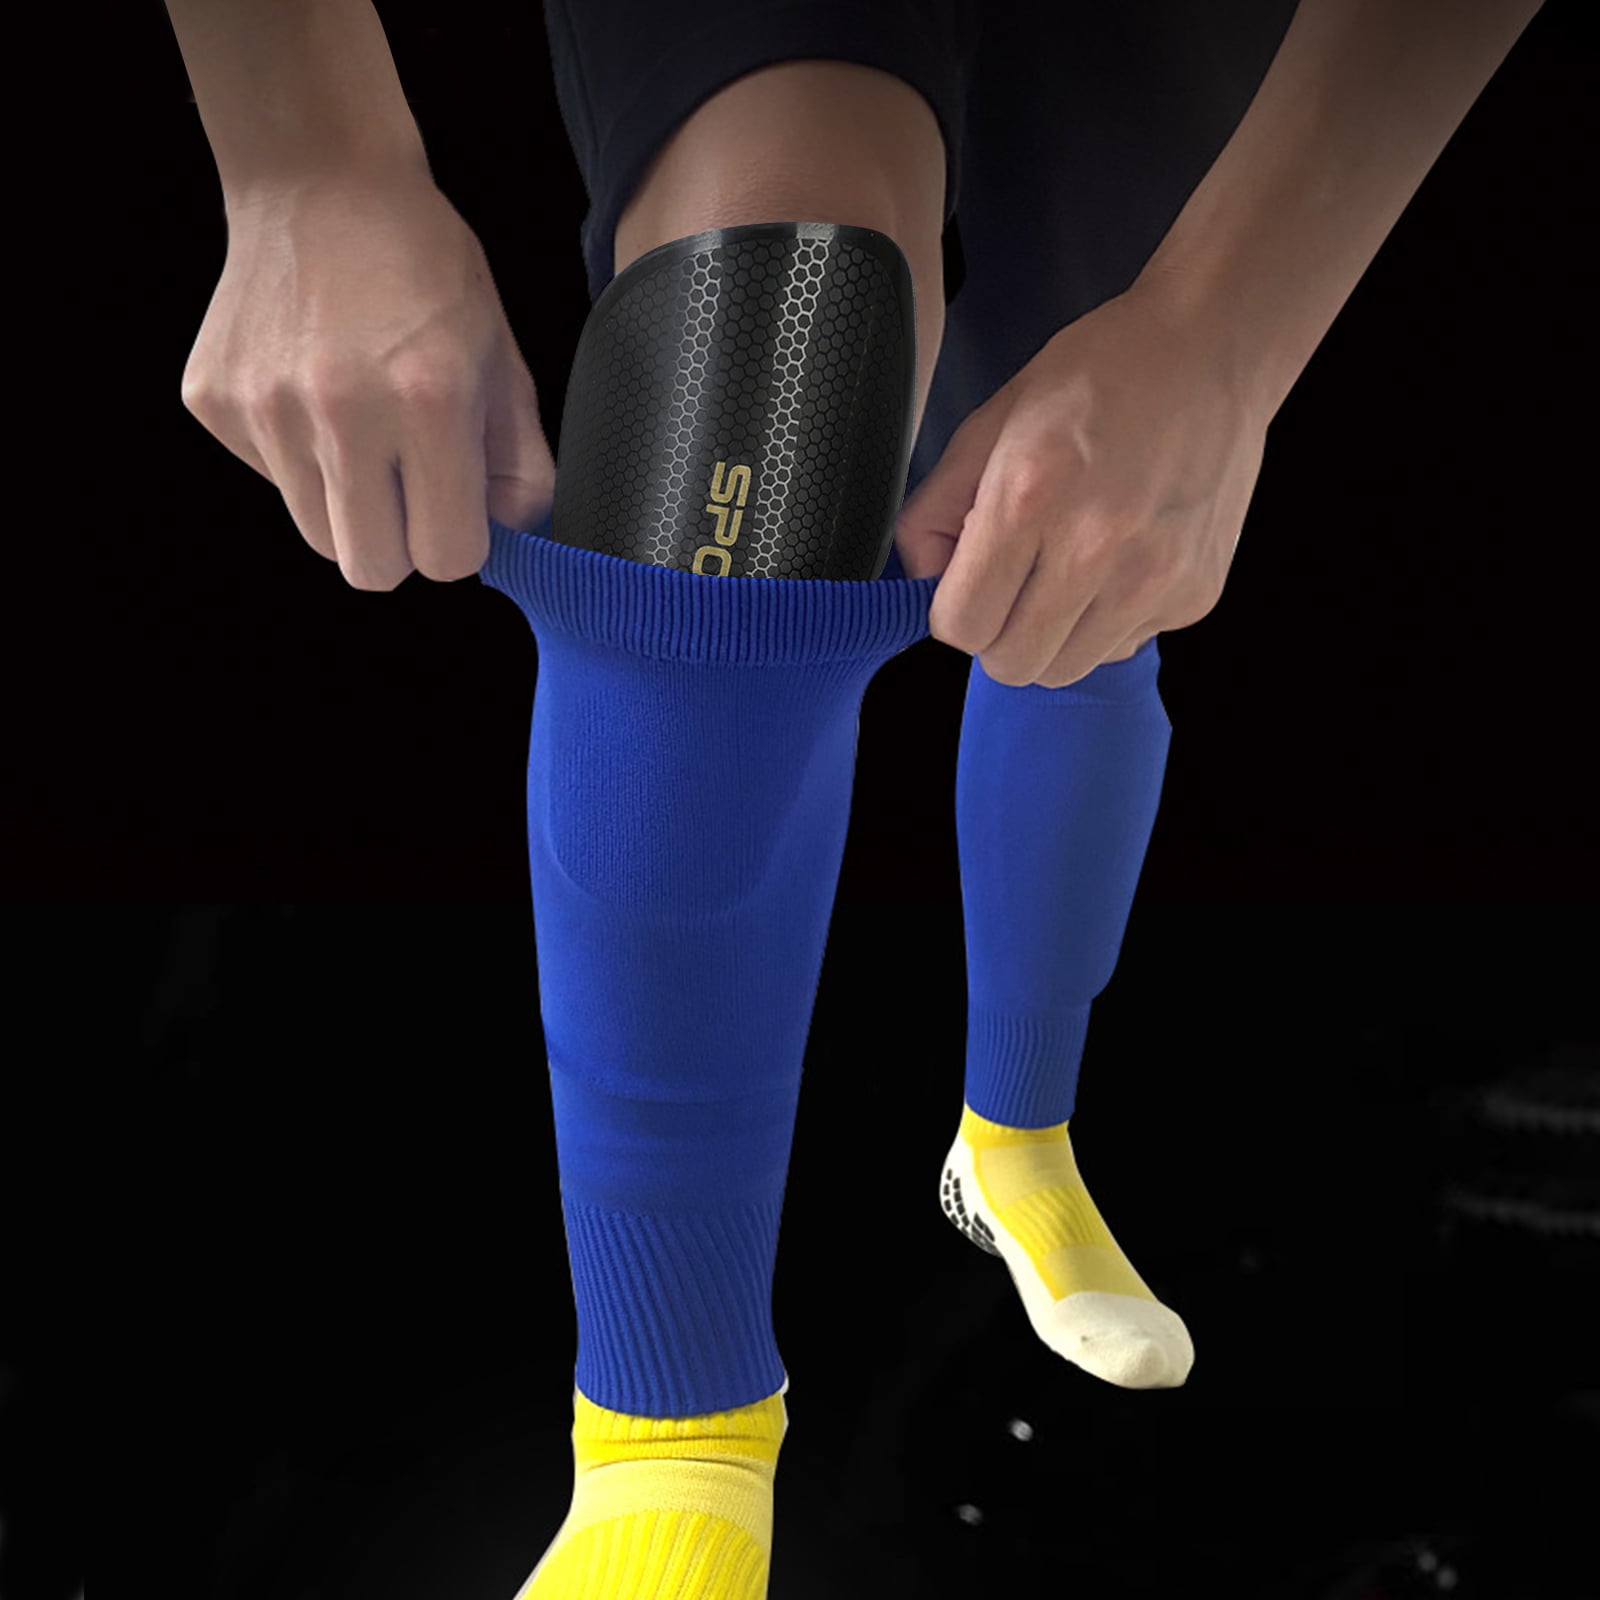 New Balance Soccer Shin Guards Ergonomic Design, Optimal